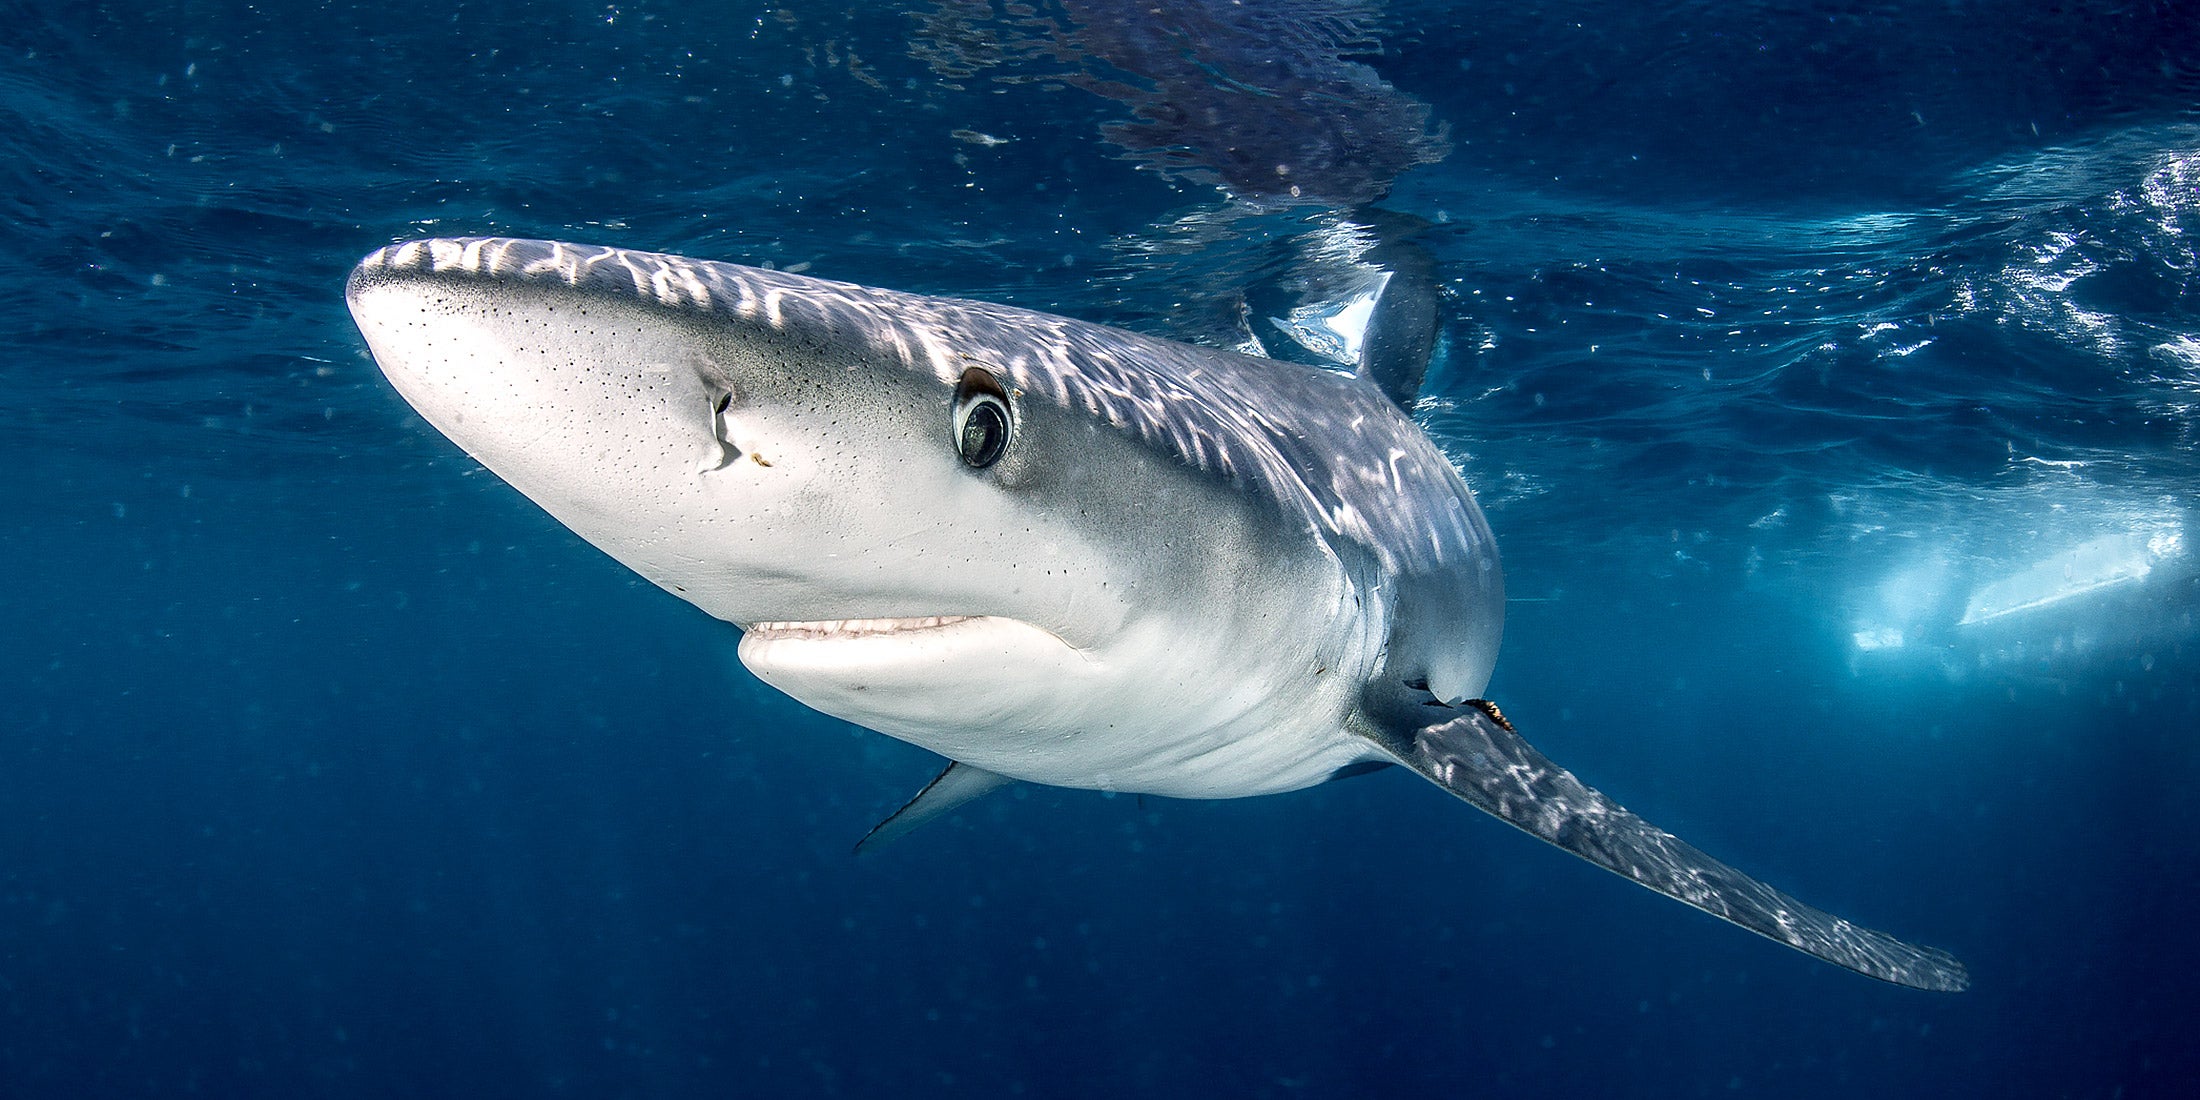 A shark swimming underwater.